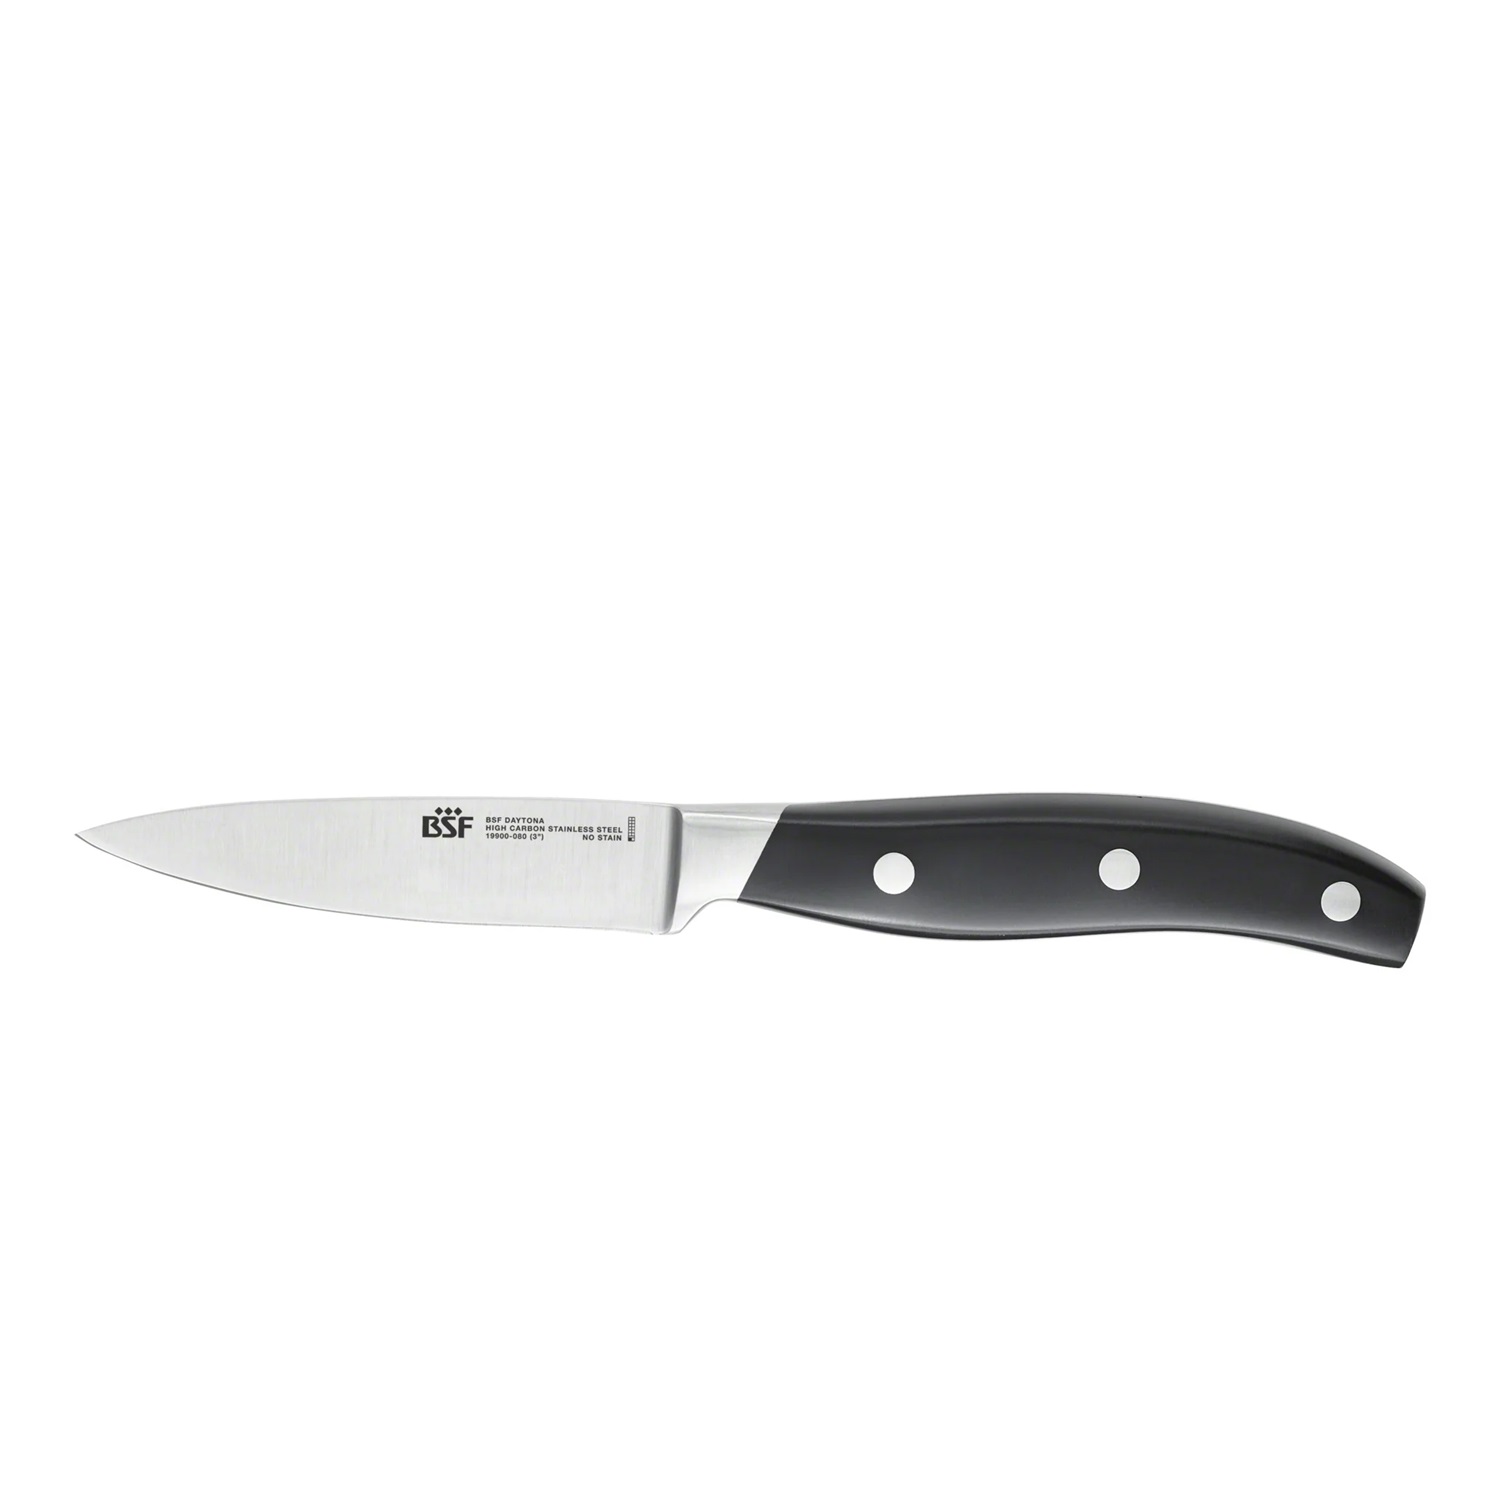 Couteau office à larder ou garnir daytona 9 cm - bsf